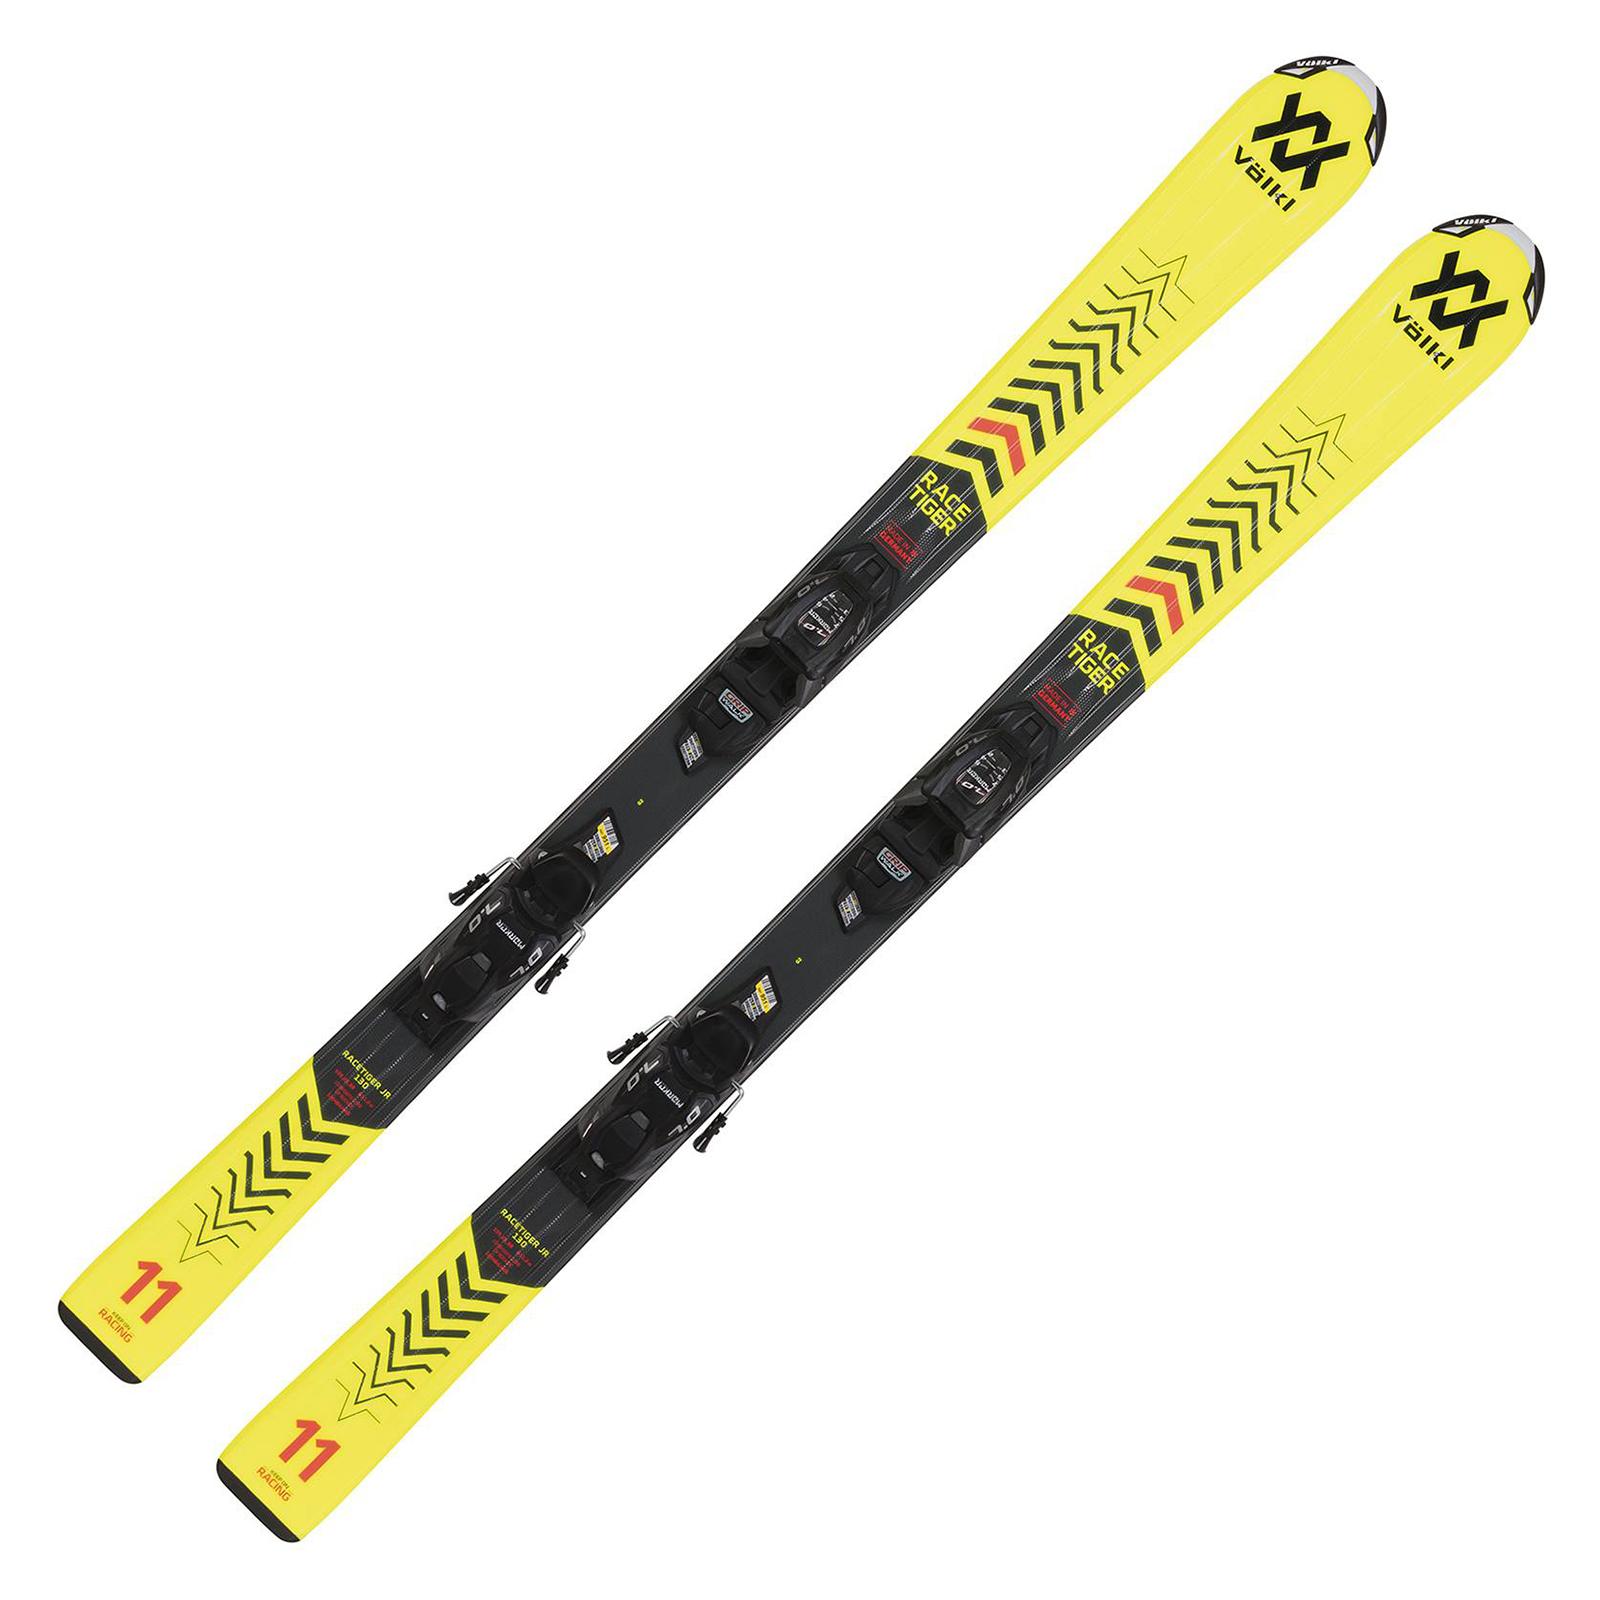 Völkl Racetiger yellow 80-120cm Junior Ski 2022/23